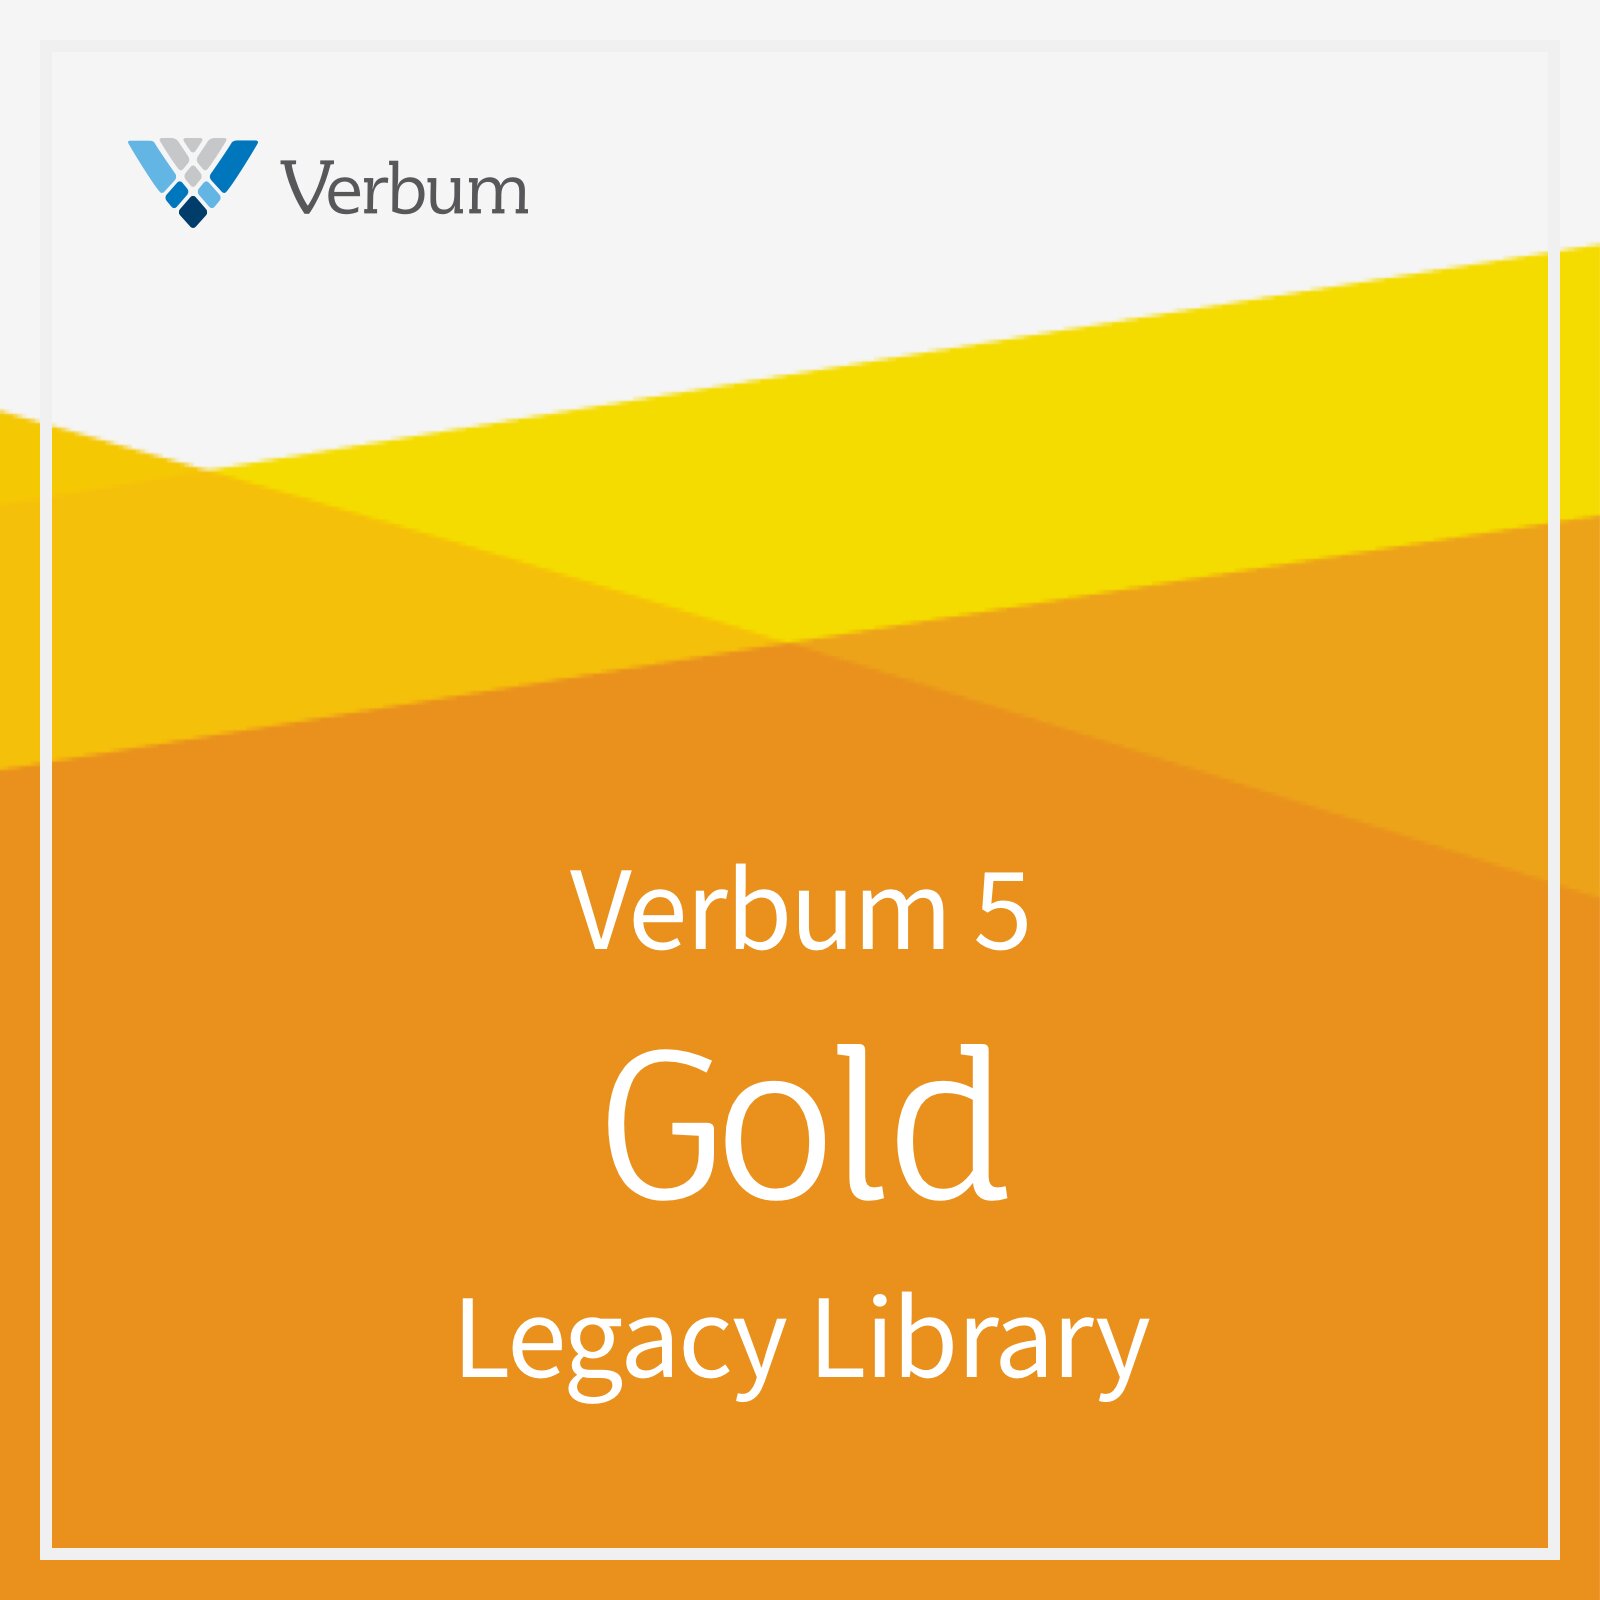 Verbum 5 Gold Legacy Library